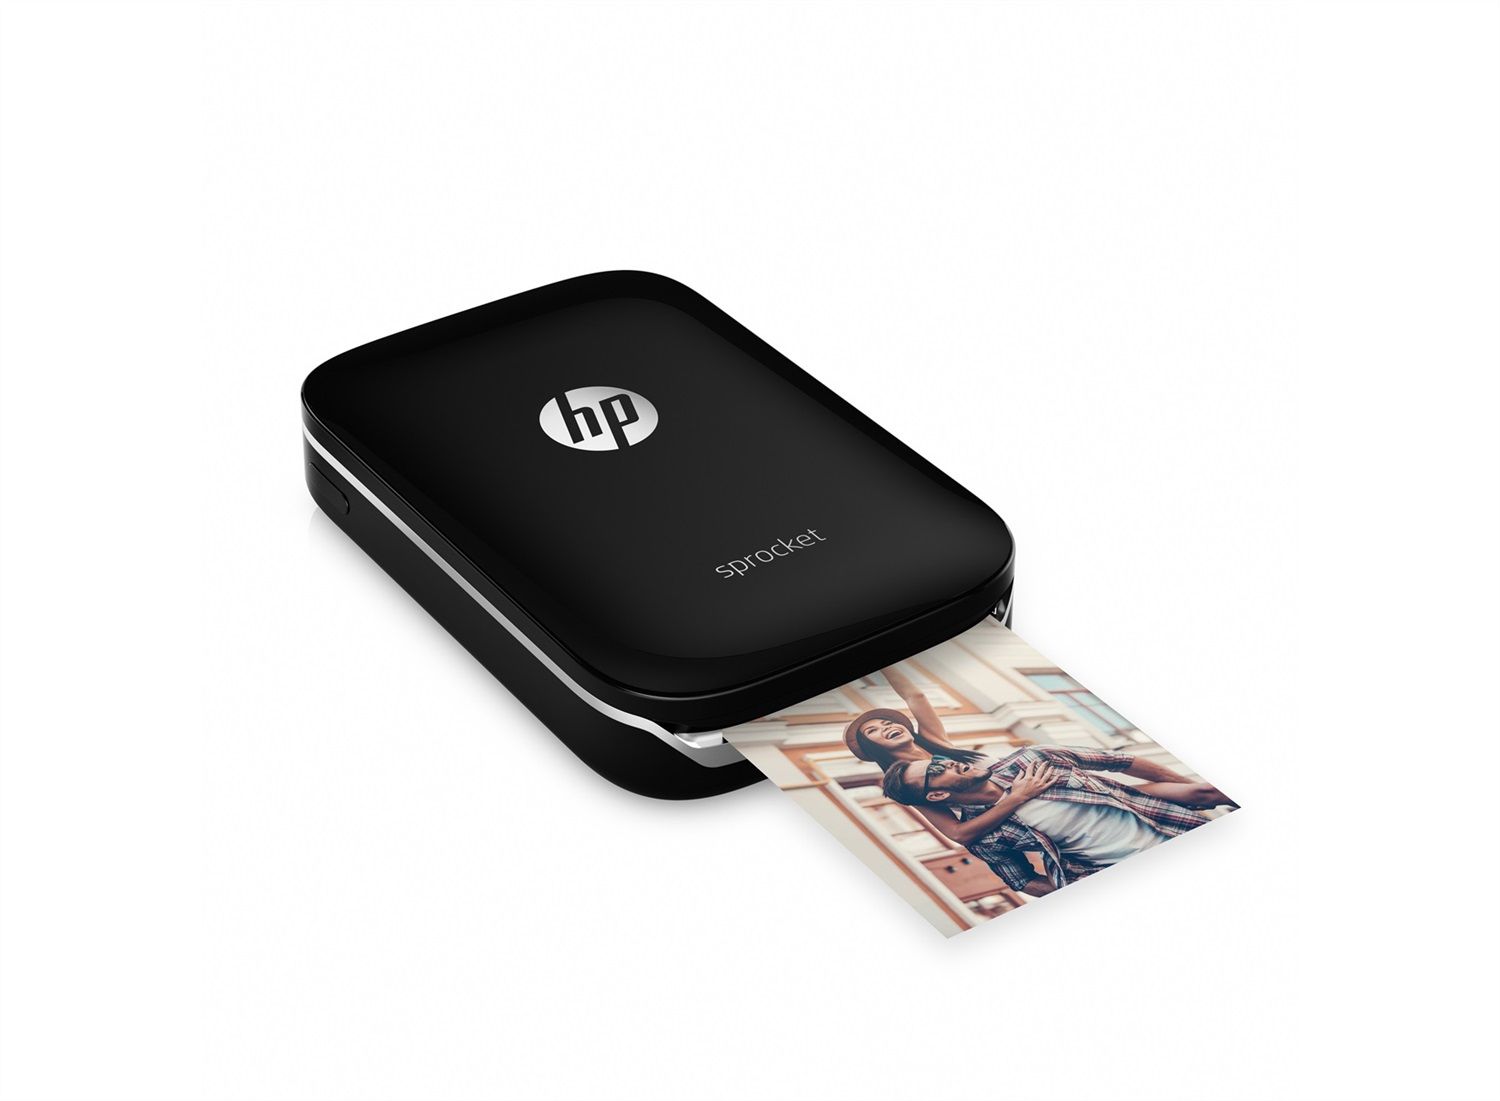 HP - Sprocket Stampante Fotografica Istantanea Portatile per foto